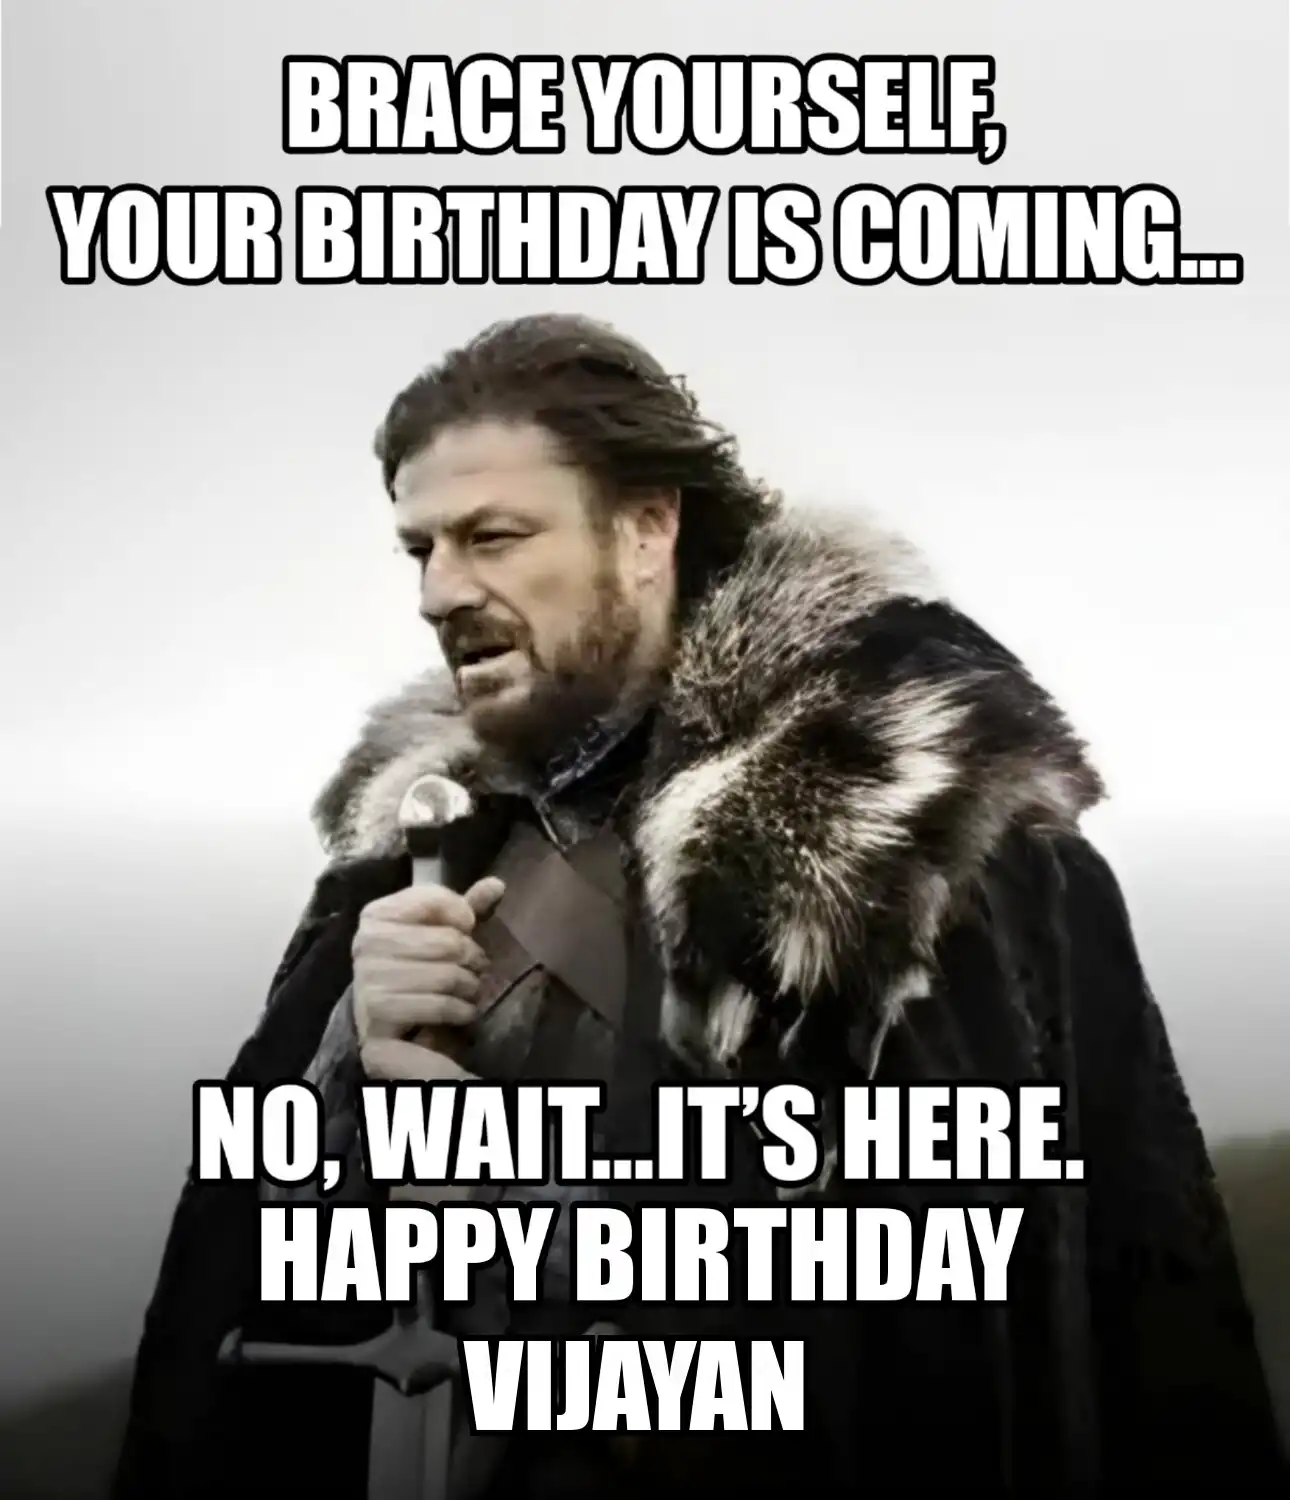 Happy Birthday Vijayan Brace Yourself Your Birthday Is Coming Meme